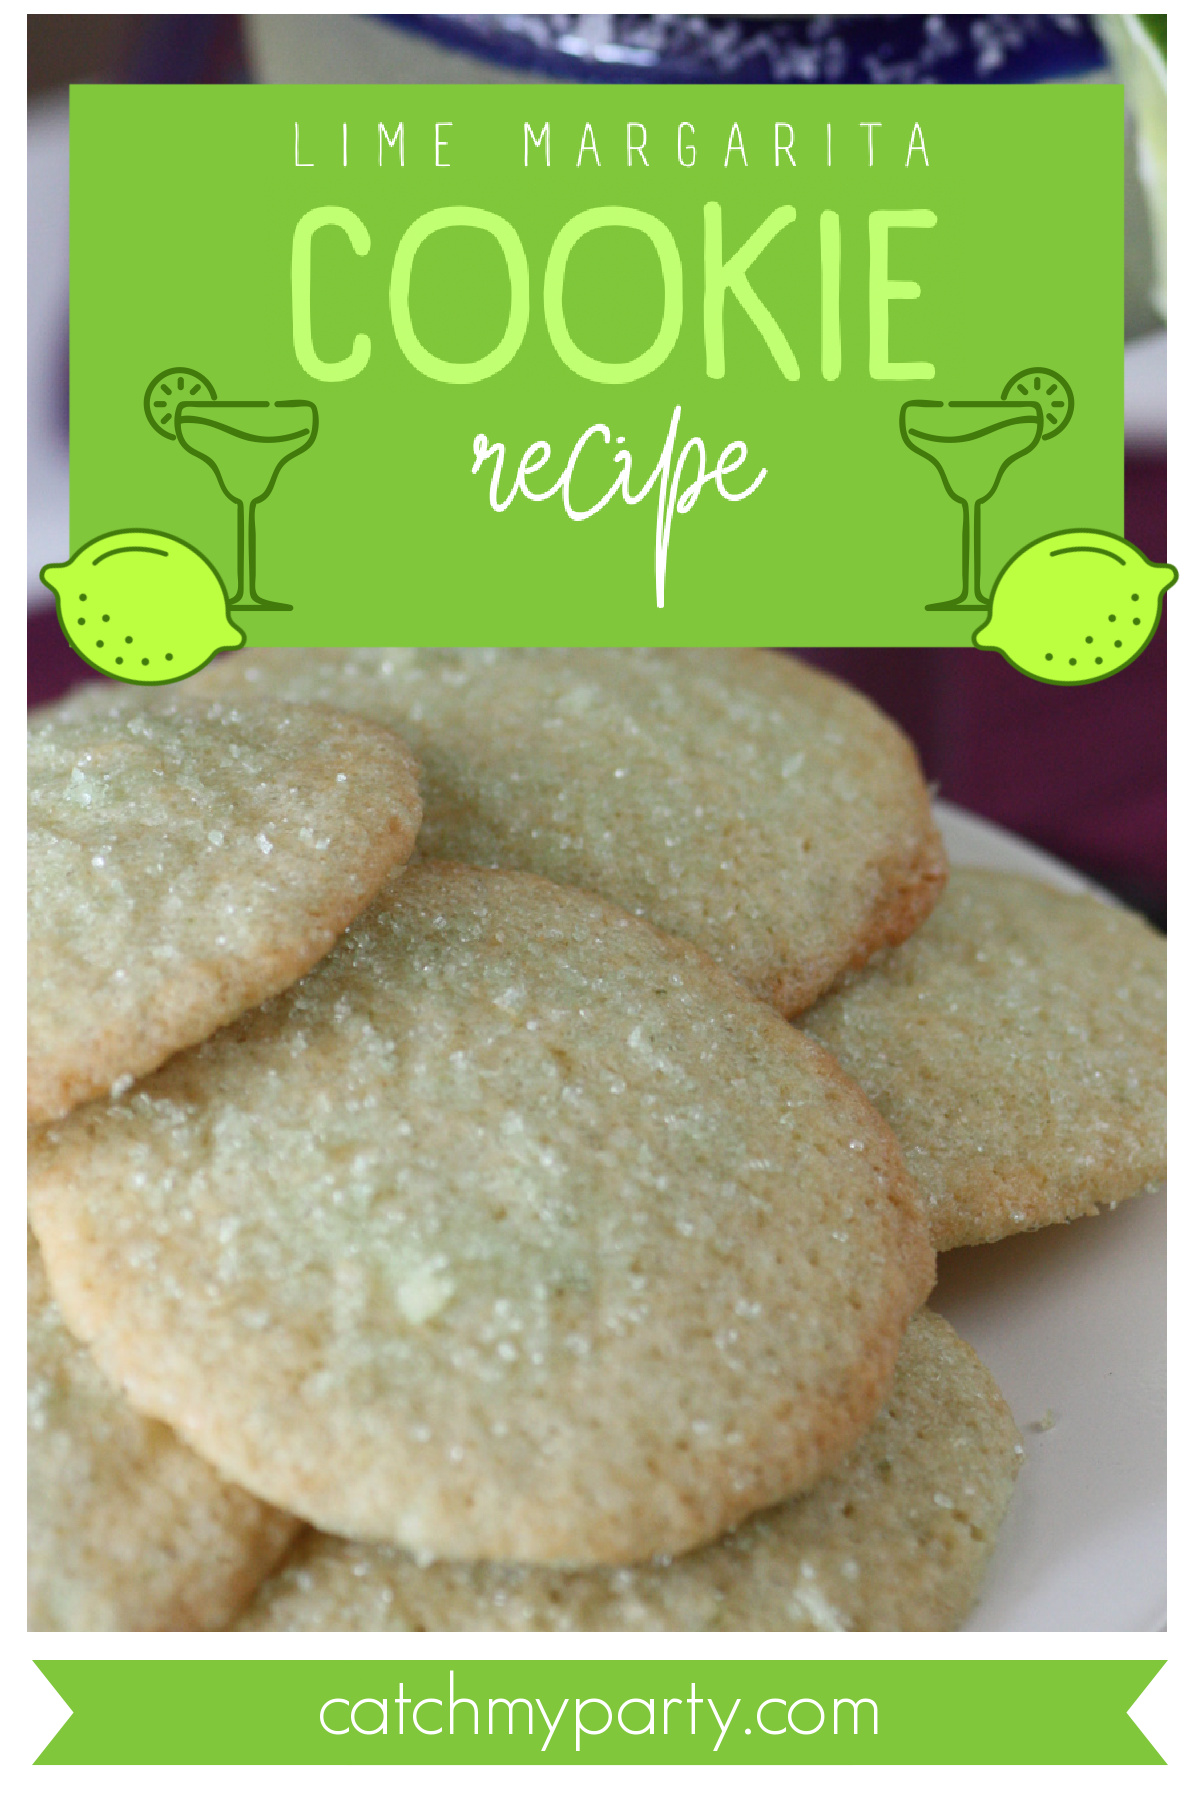 Lime Margarita Cookie Recipe